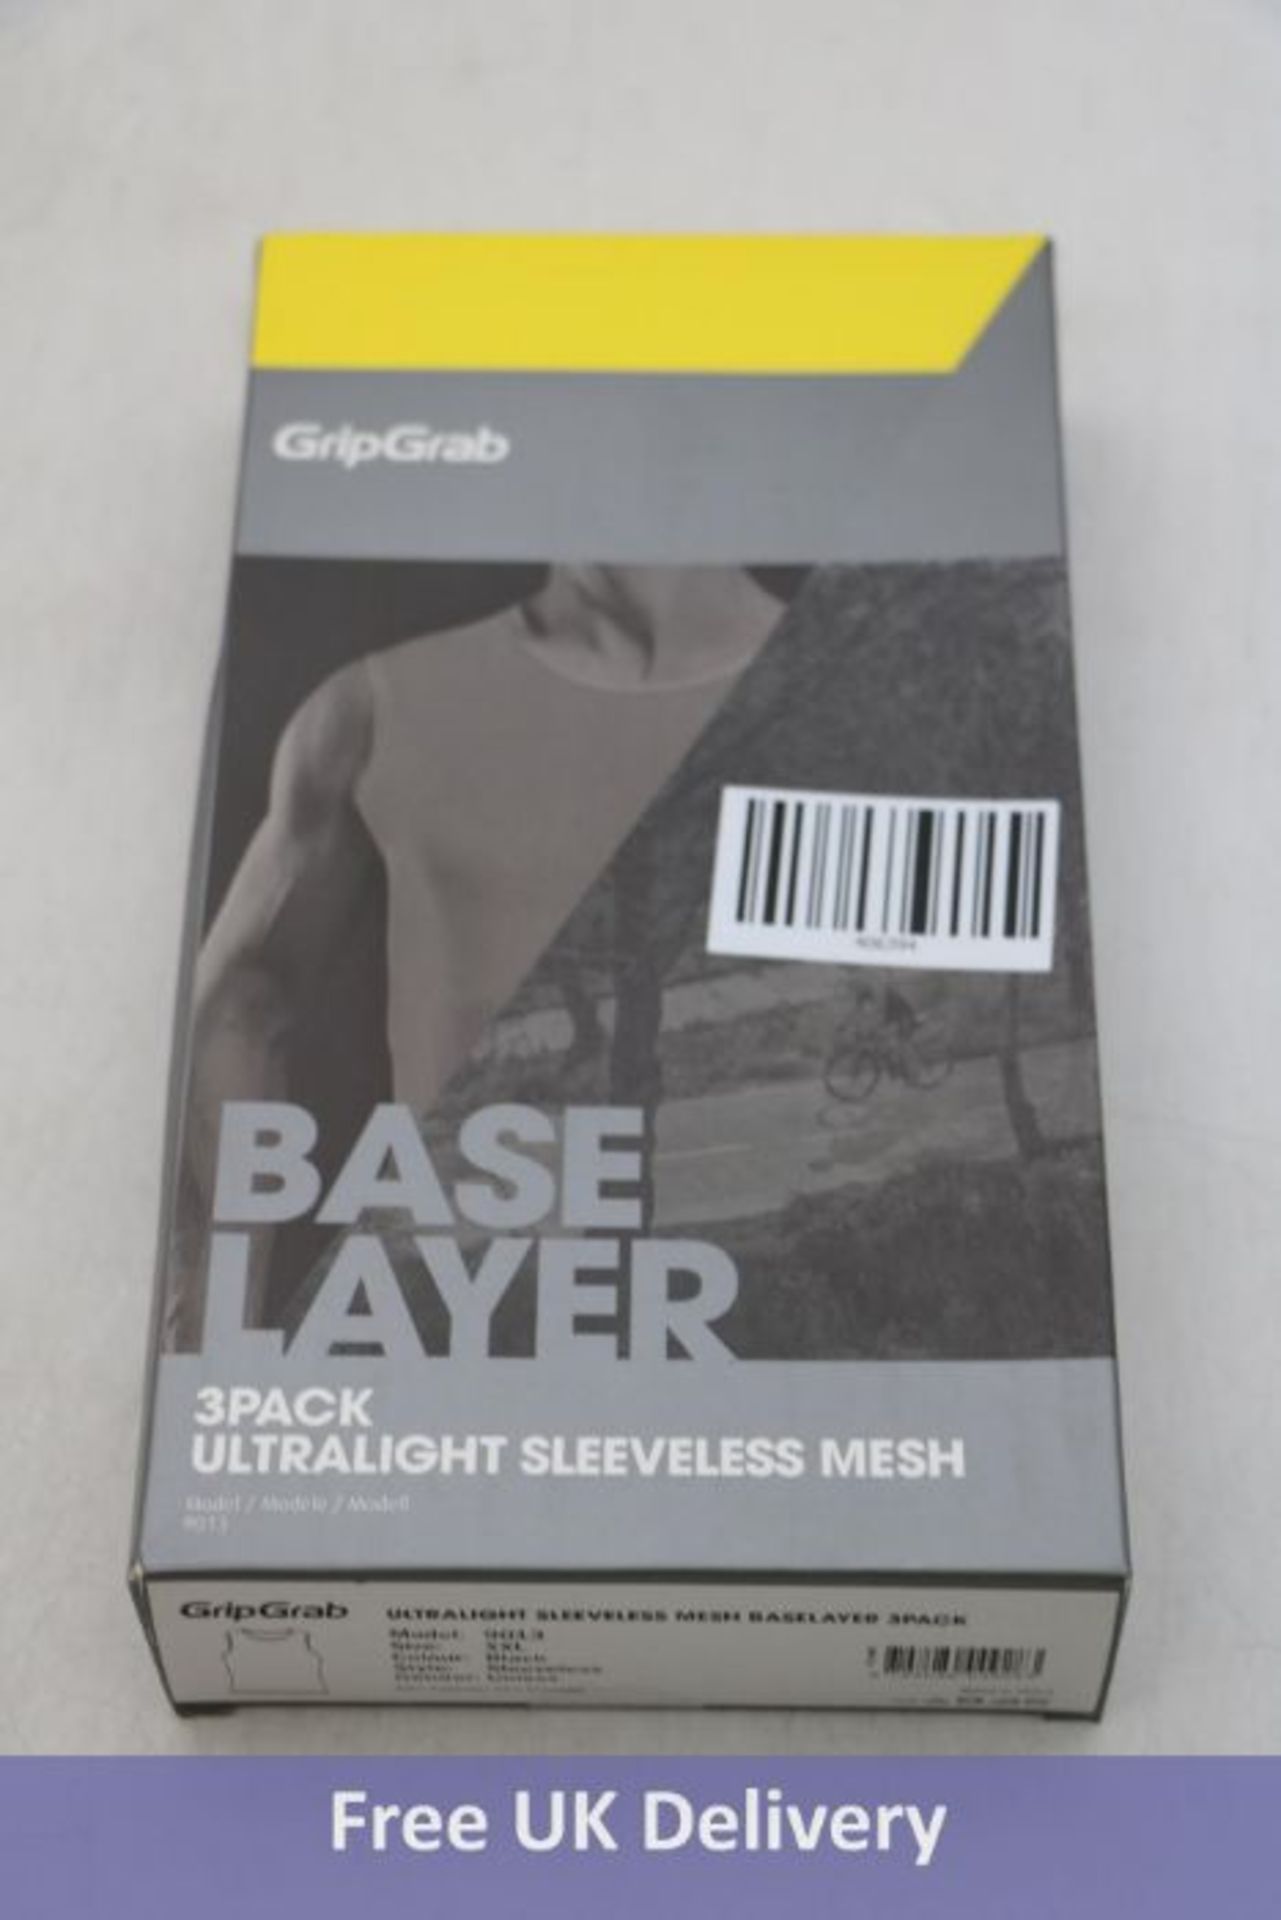 GripGrab Men's Ultralight Sleeveless Mesh Baselayer, Packs of 3, Black, Size XXL